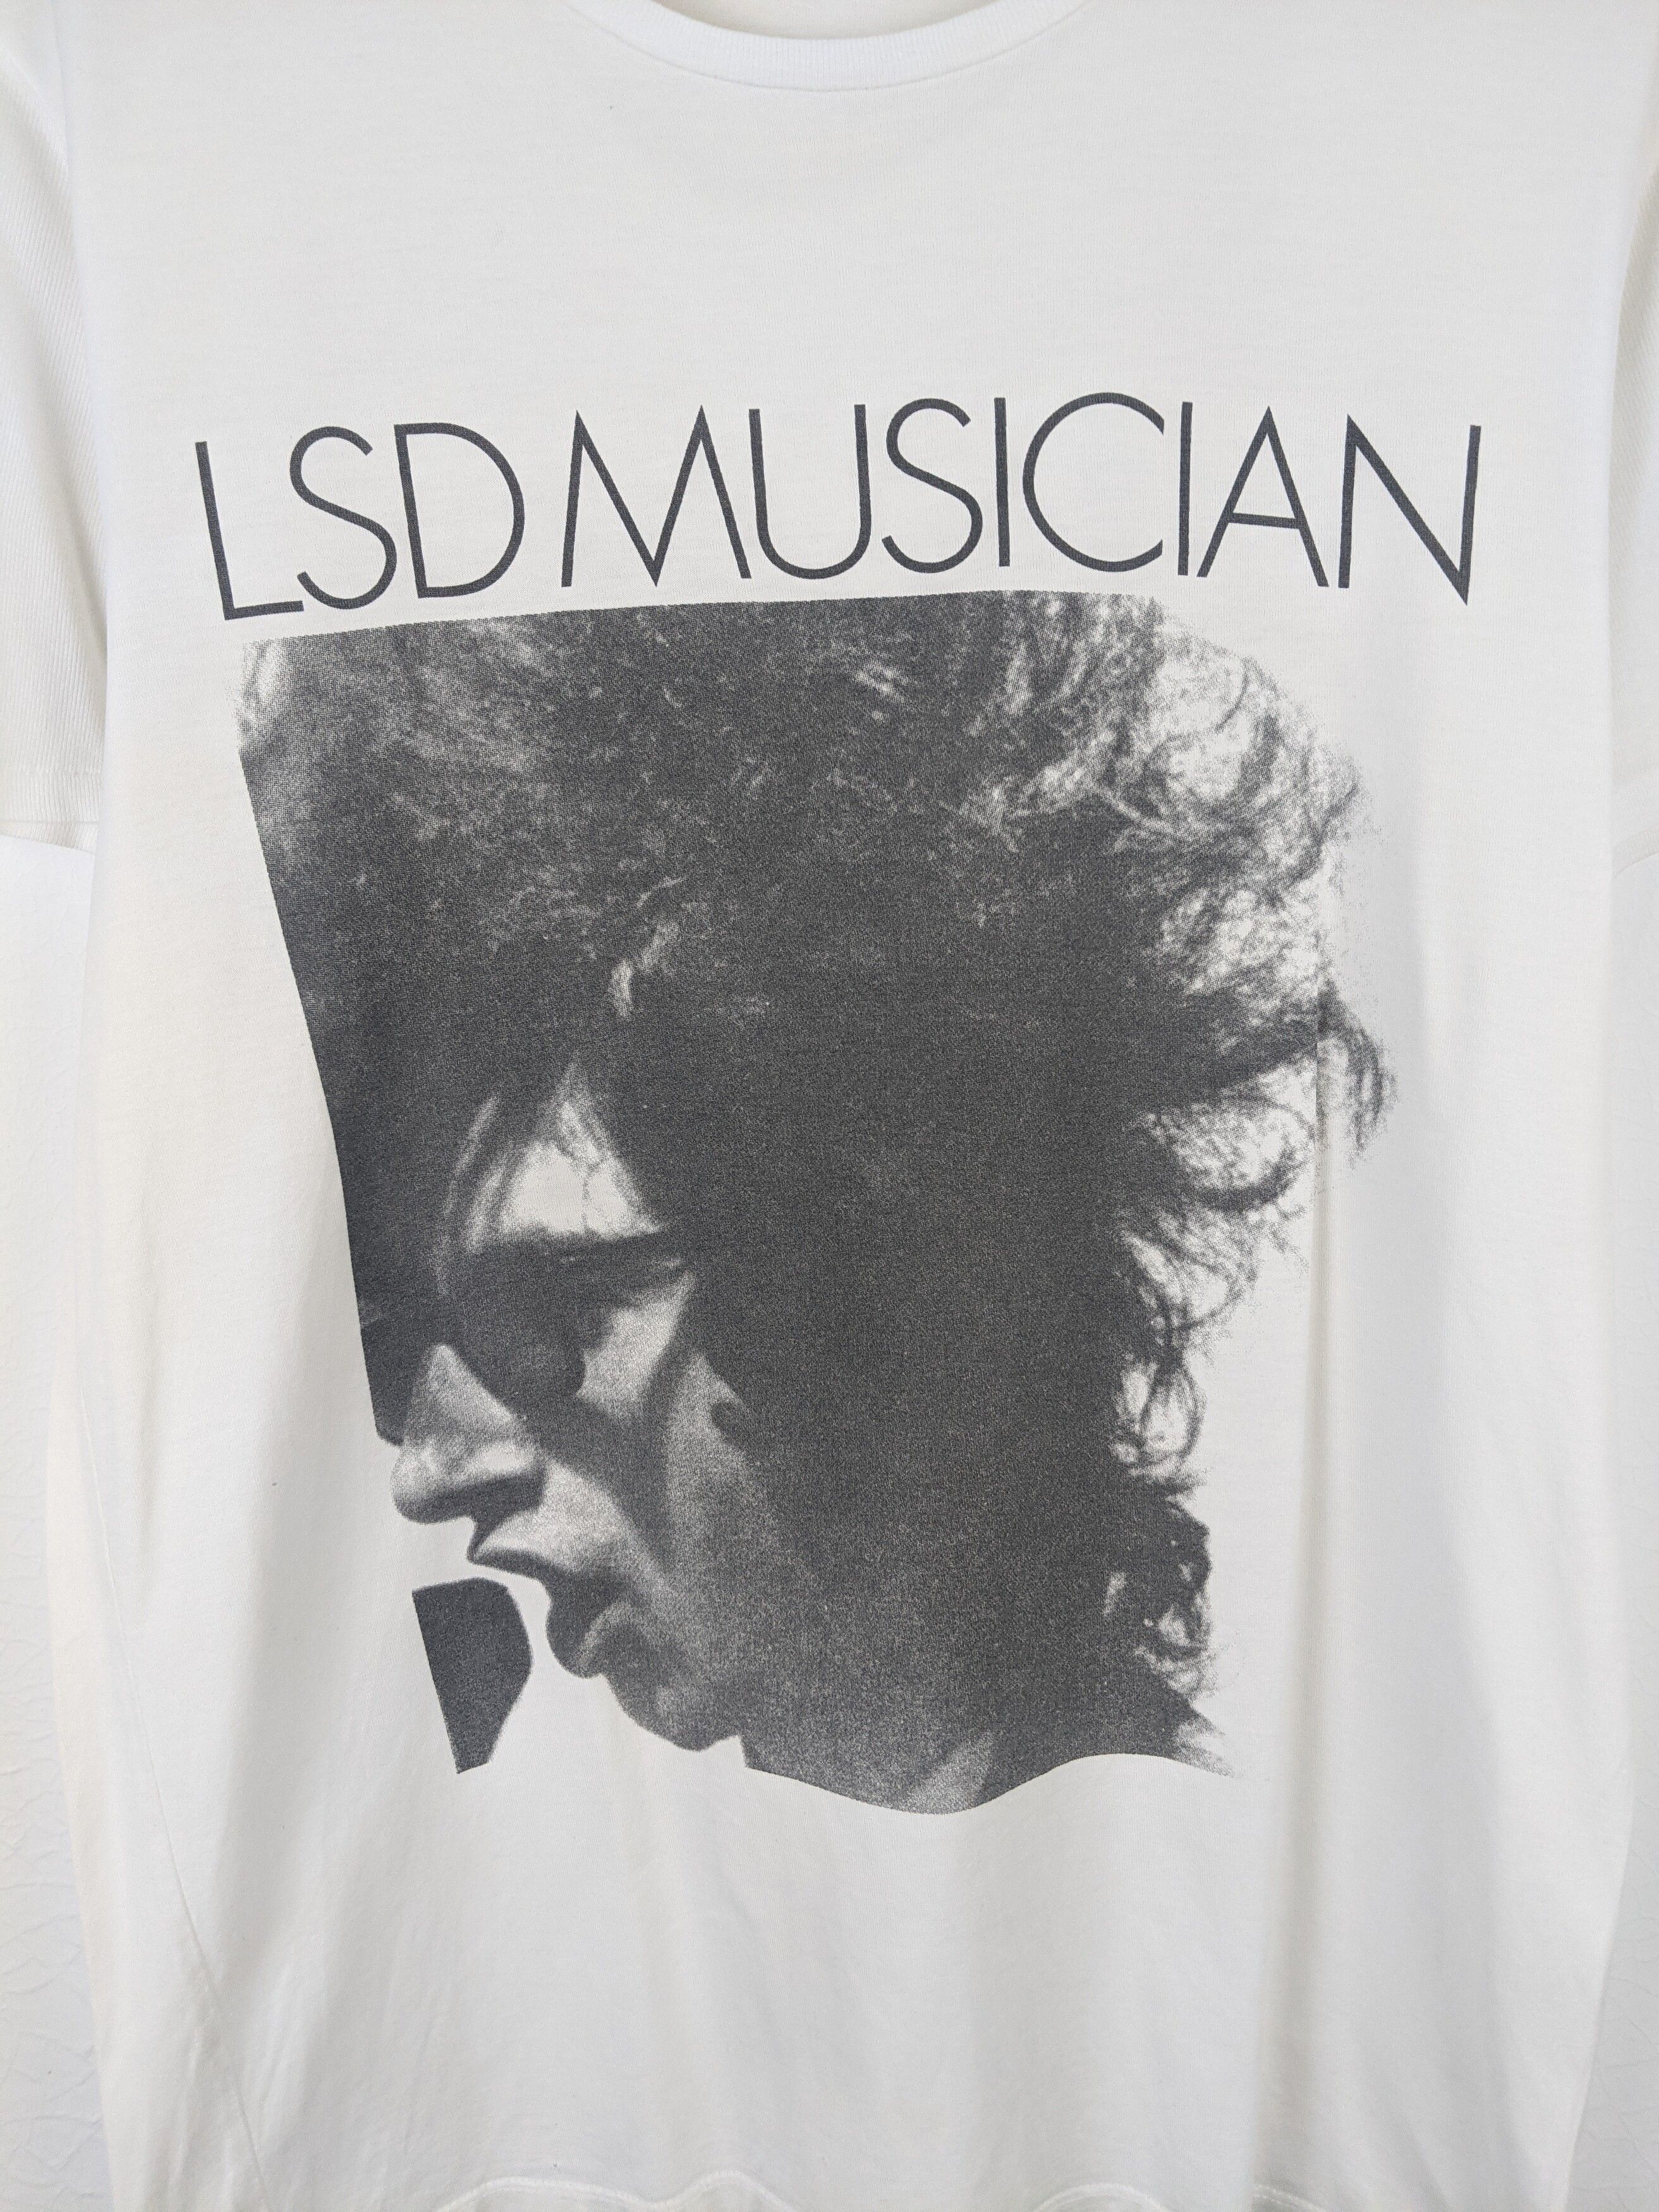 Lad Musician LSD Musician Bob Dylan shirt - 2